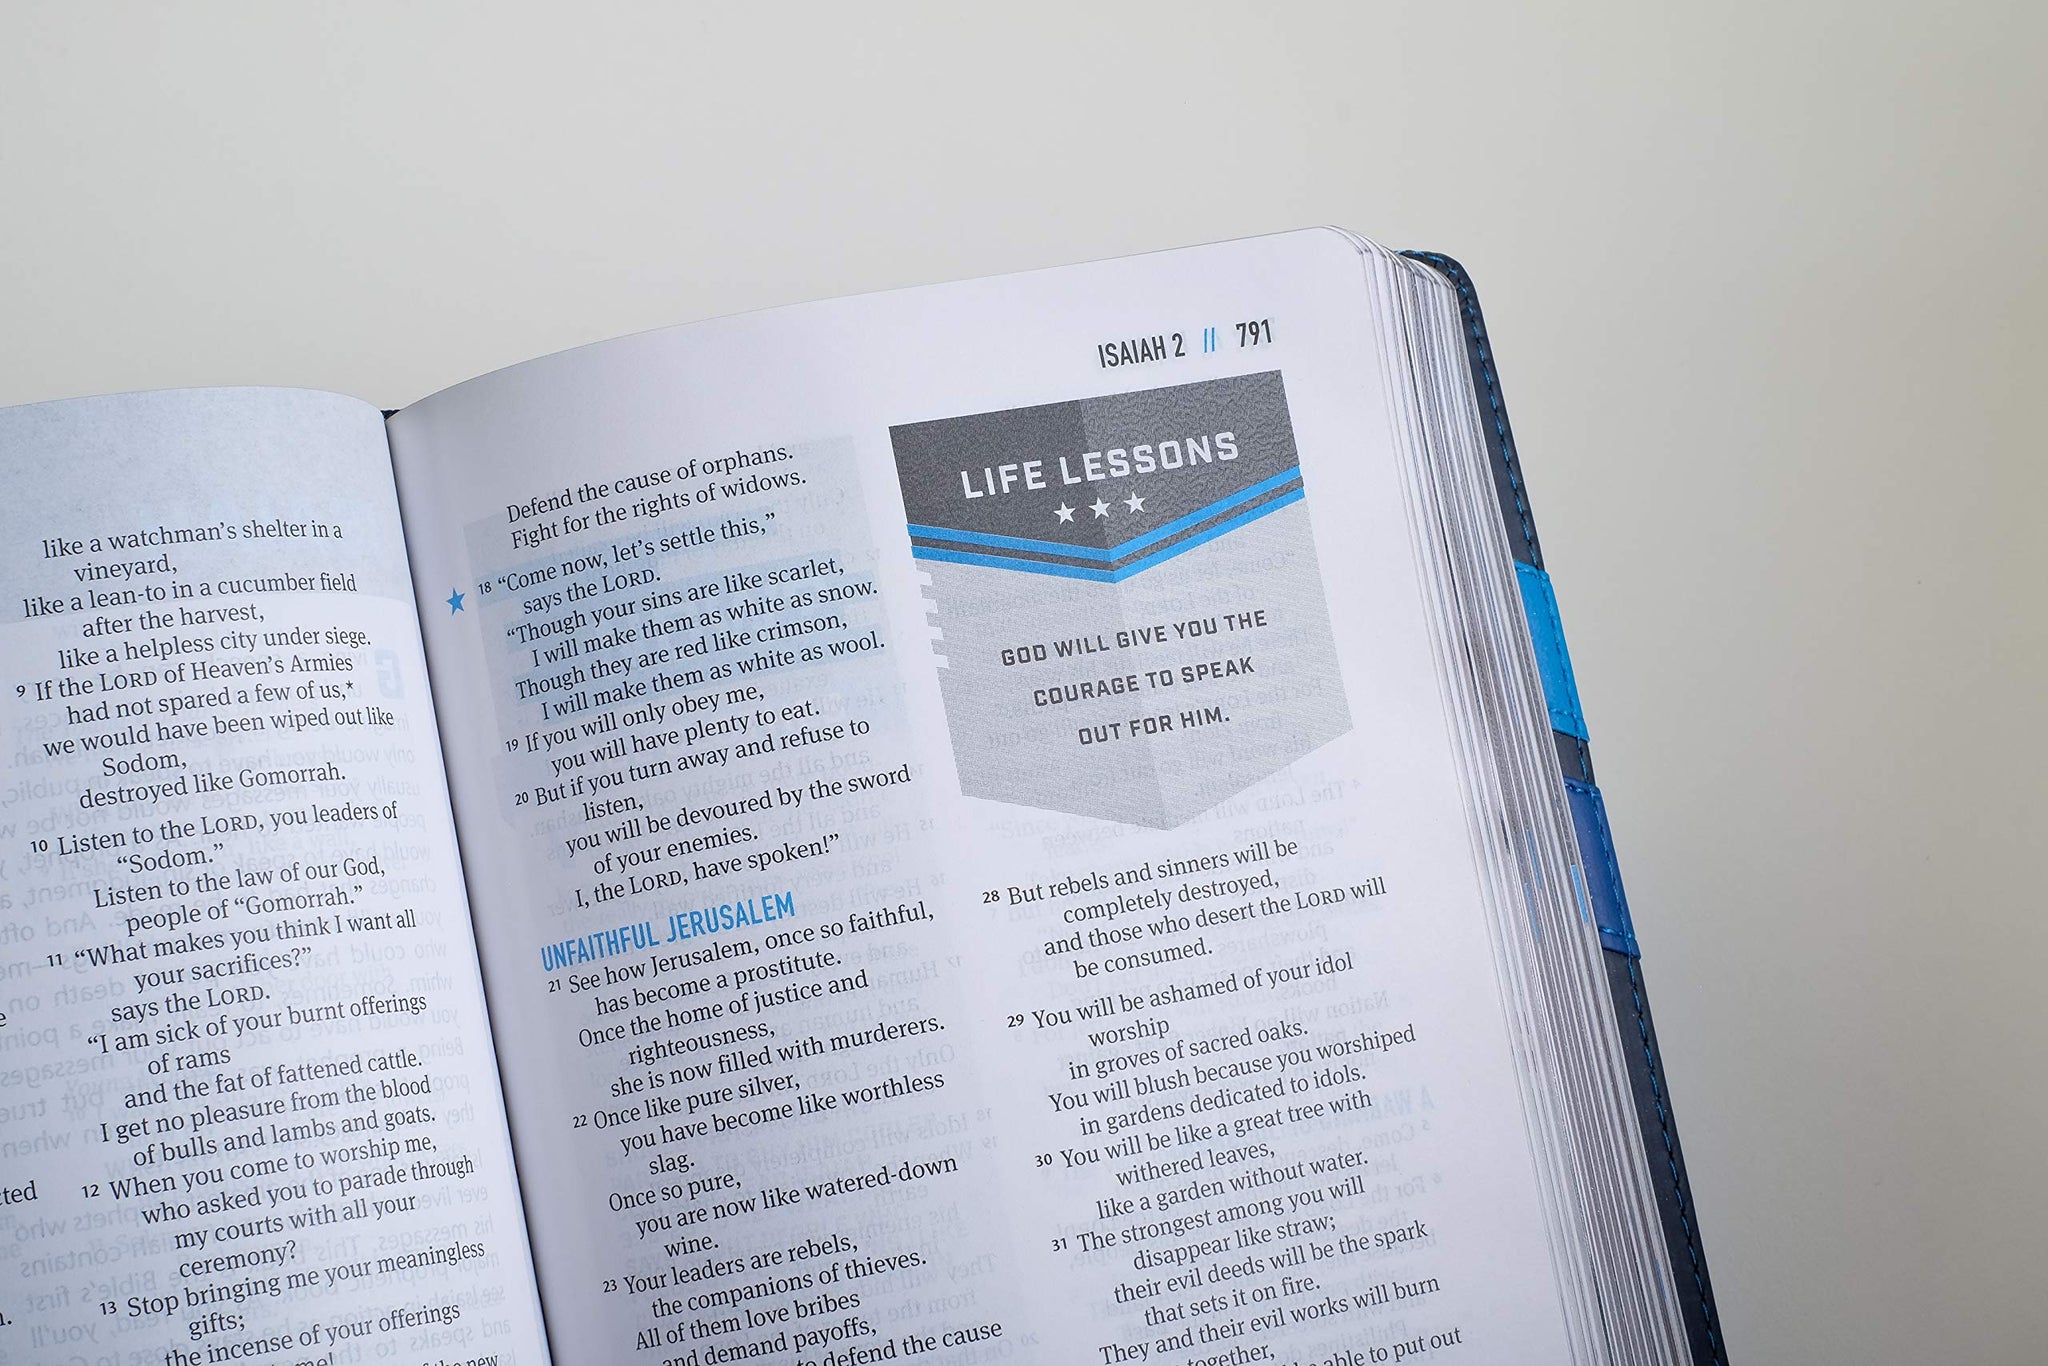 NLT Boys Life Application Study Bible - LeatherLike, Neon Cross